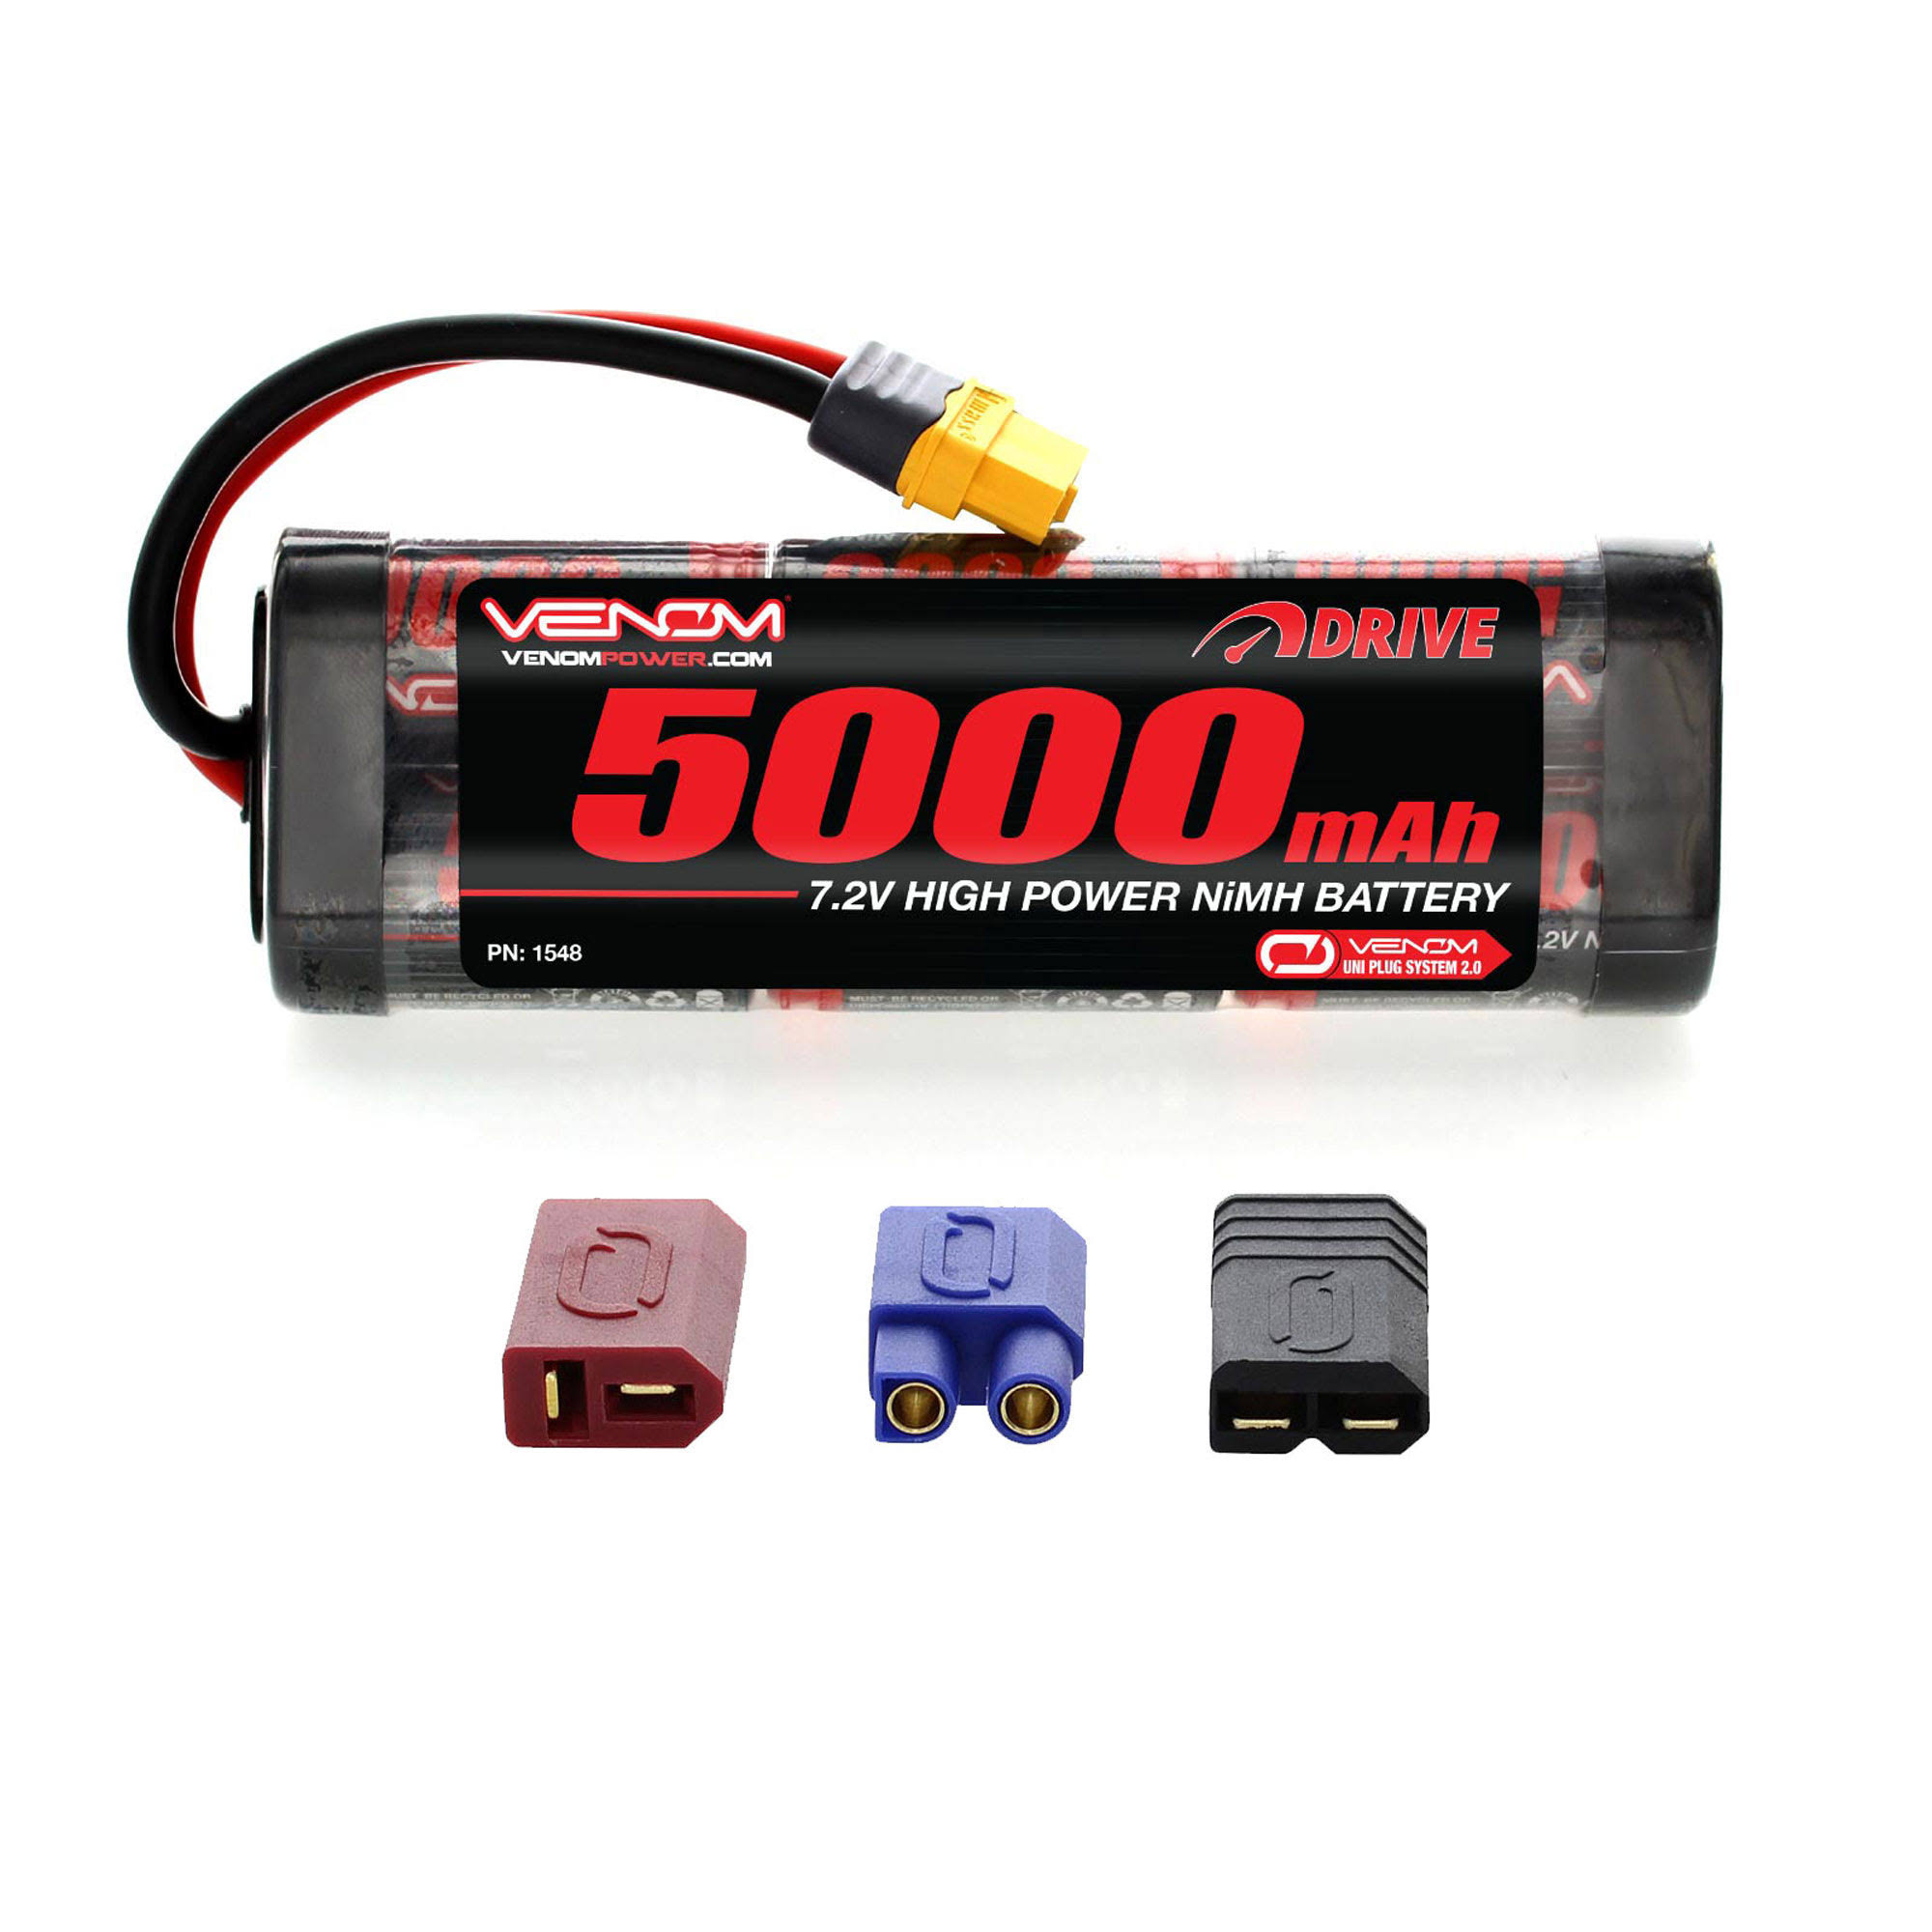 Venom NiMH Battery - with Universal Plug, 7.2v, 5000mAh, 6 Cell